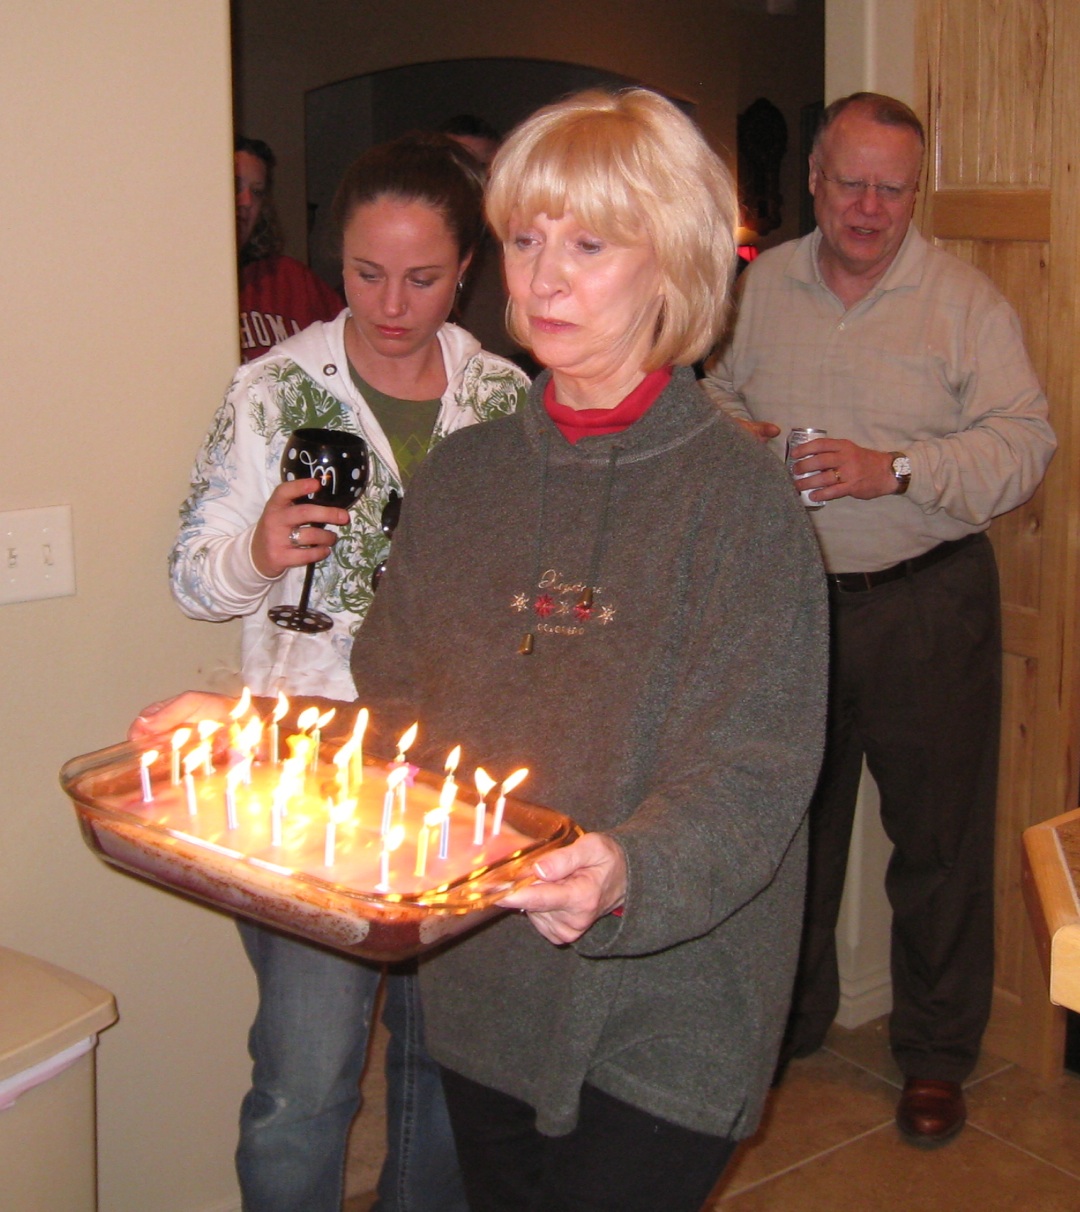 http://3.bp.blogspot.com/_Dc7jZhZEWu0/S7jBvDksPdI/AAAAAAAAGlI/zG7lU_3ErGI/s1600/Cheryl+with+birthday+cake+cropped+and+email+size.jpg